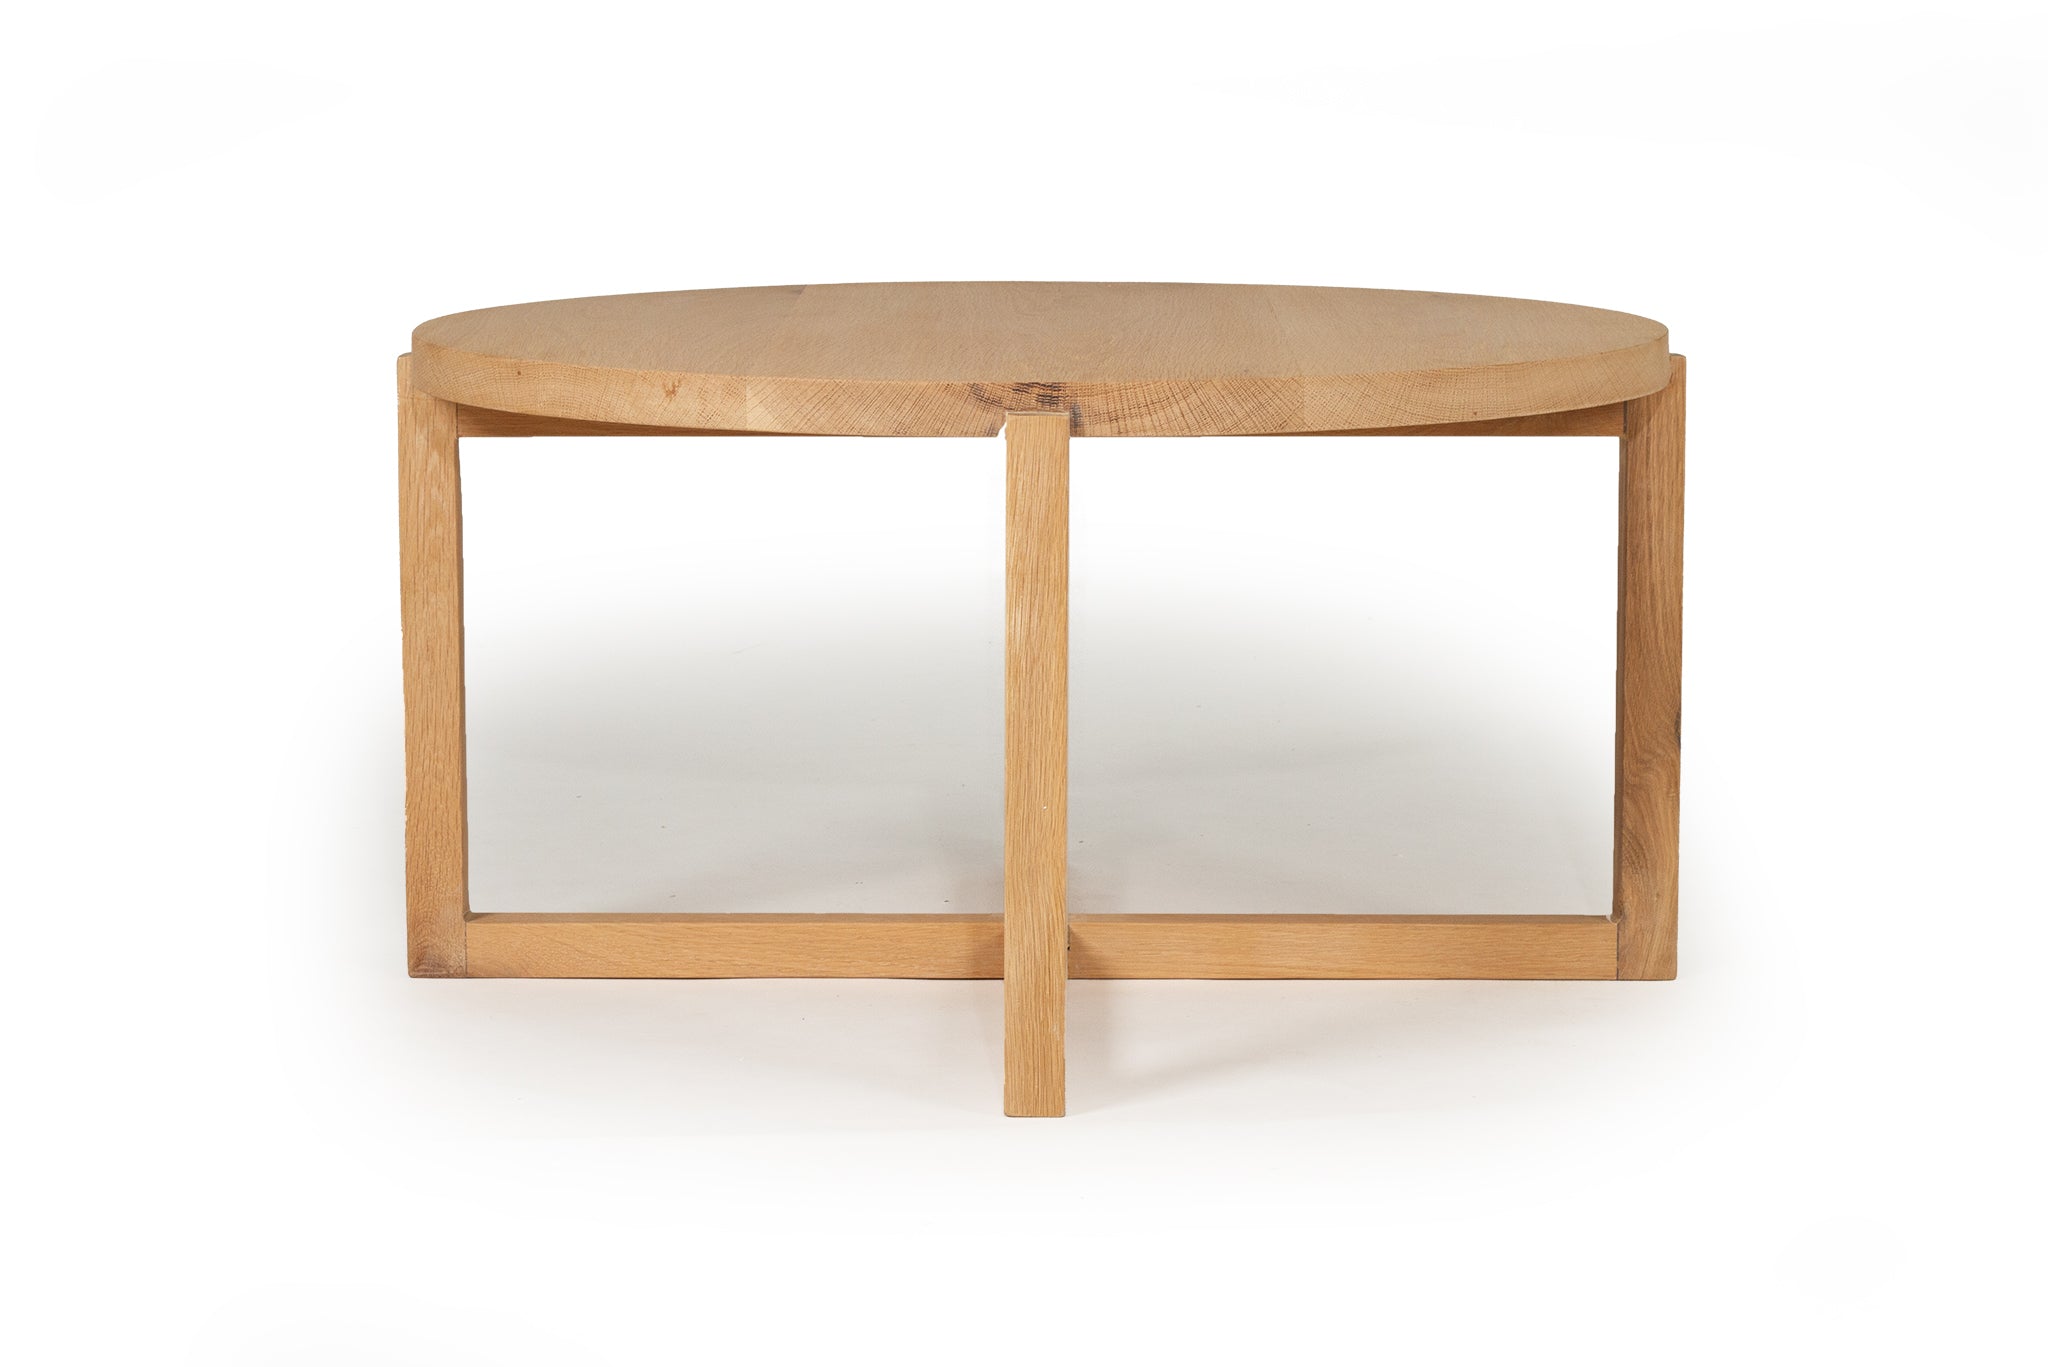 Dover American Oak Round Coffee Table – 80cm